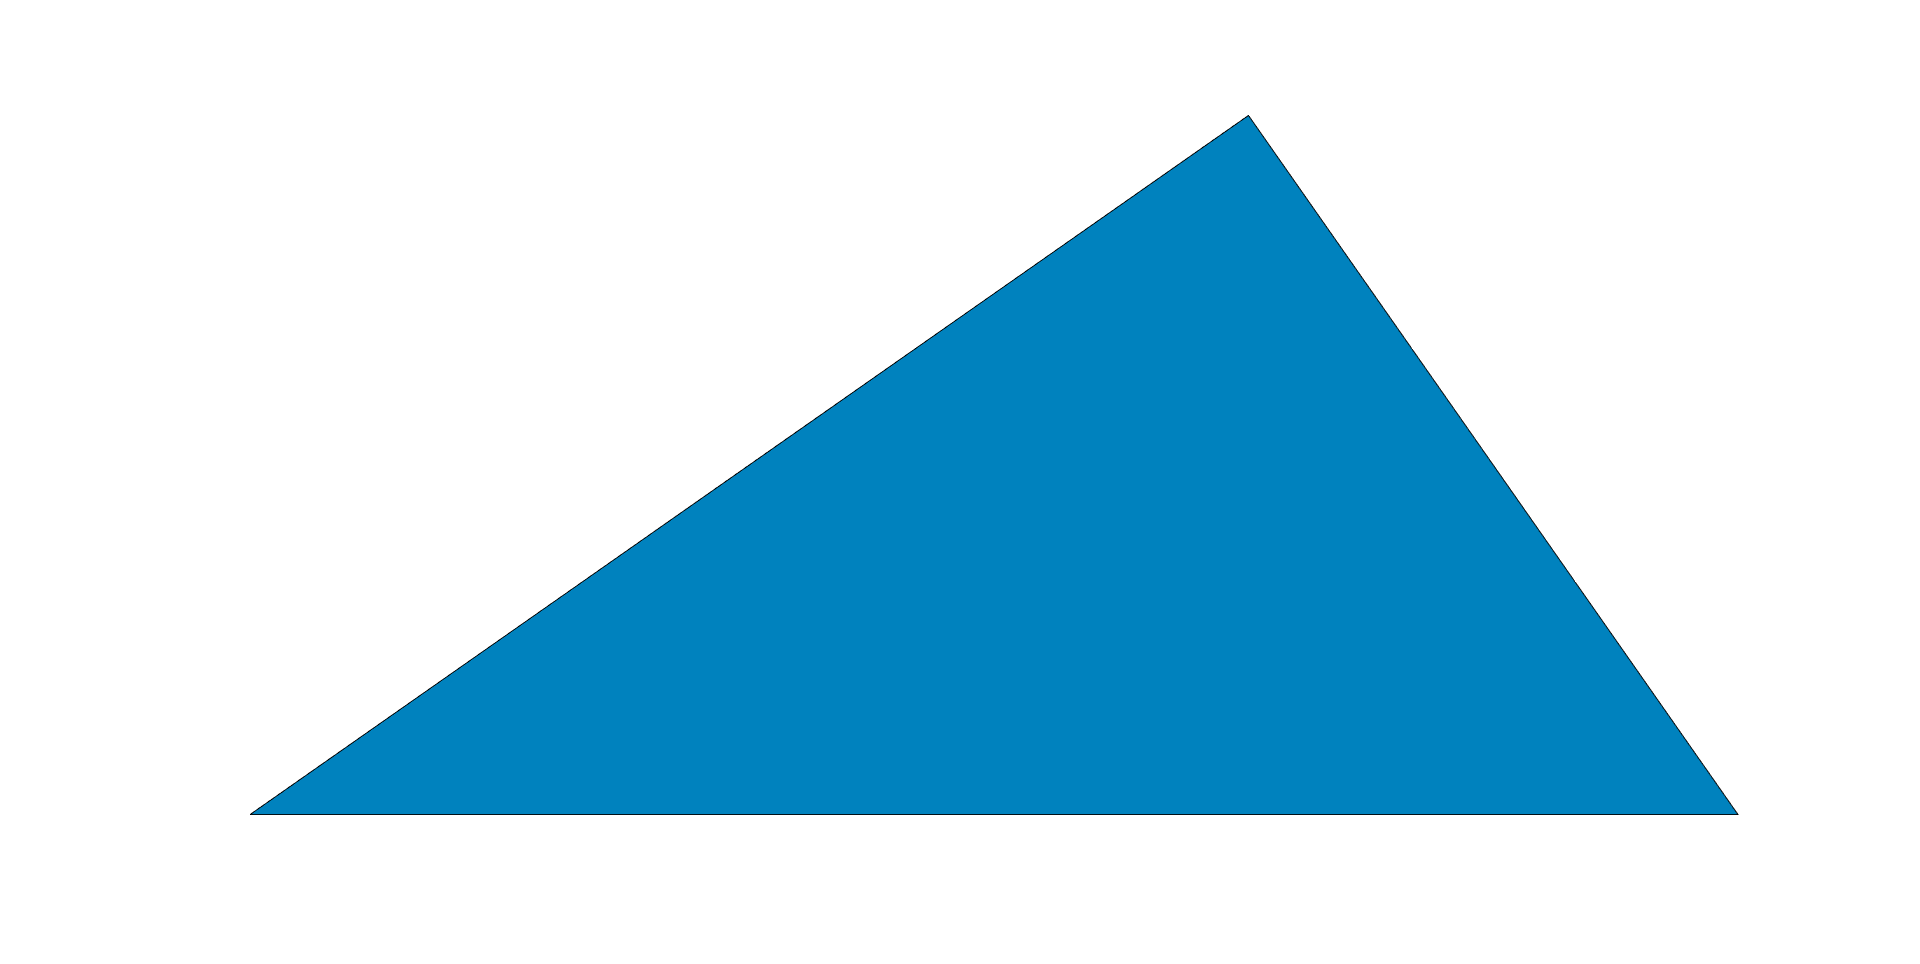 Blue scalene triangle